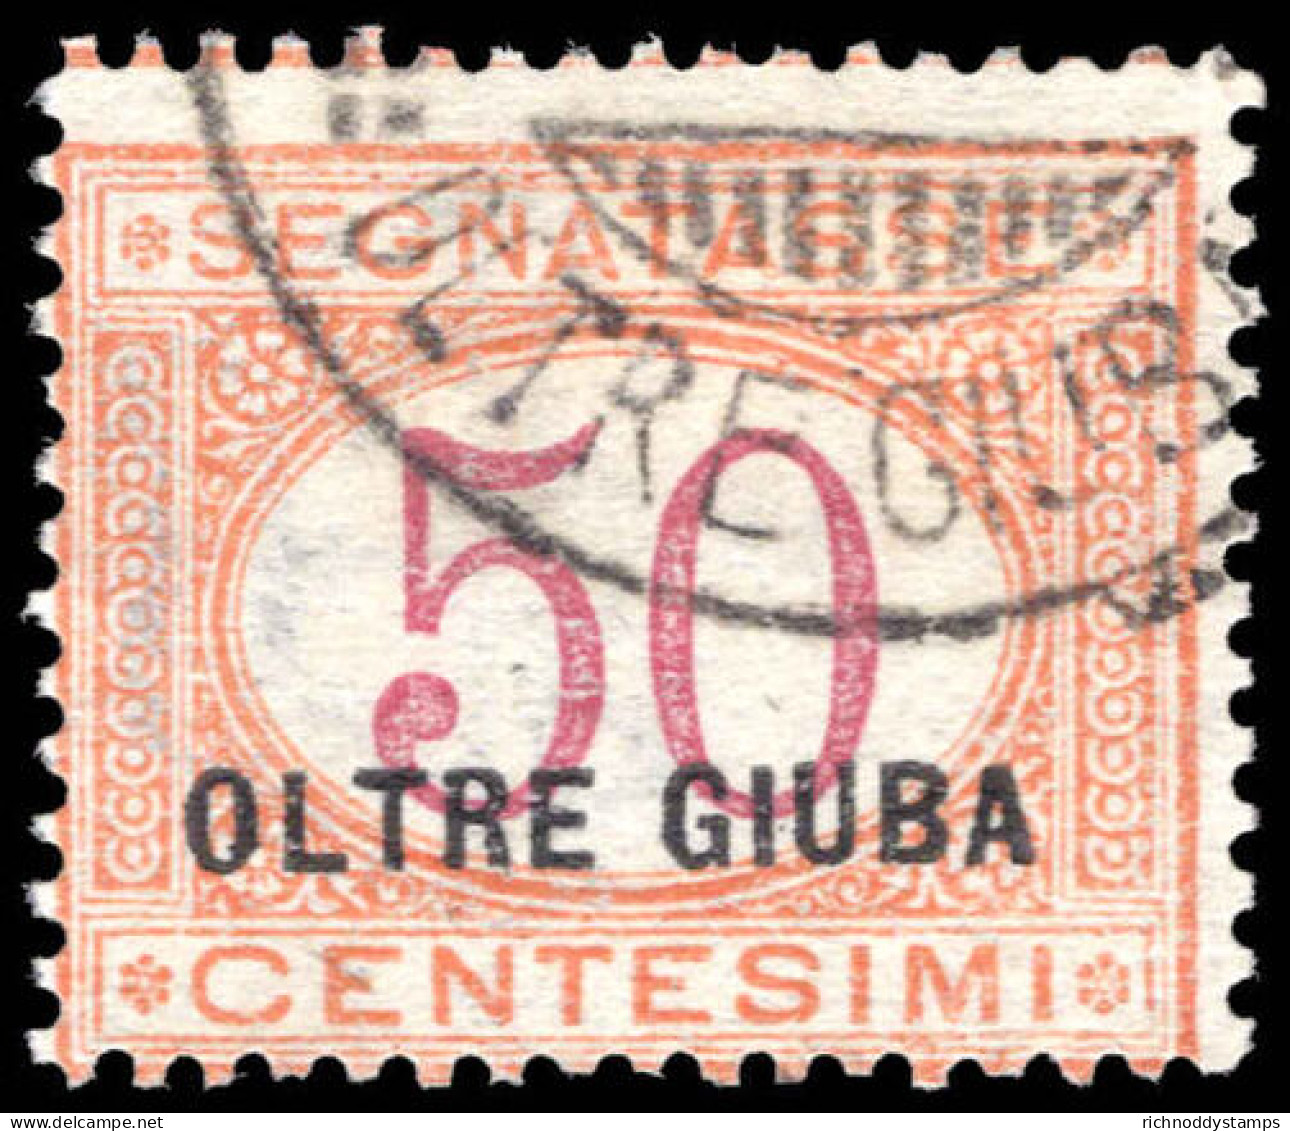 Jubaland 1925 50c Magenta And Orange Postage Due Fine Used. - Oltre Giuba